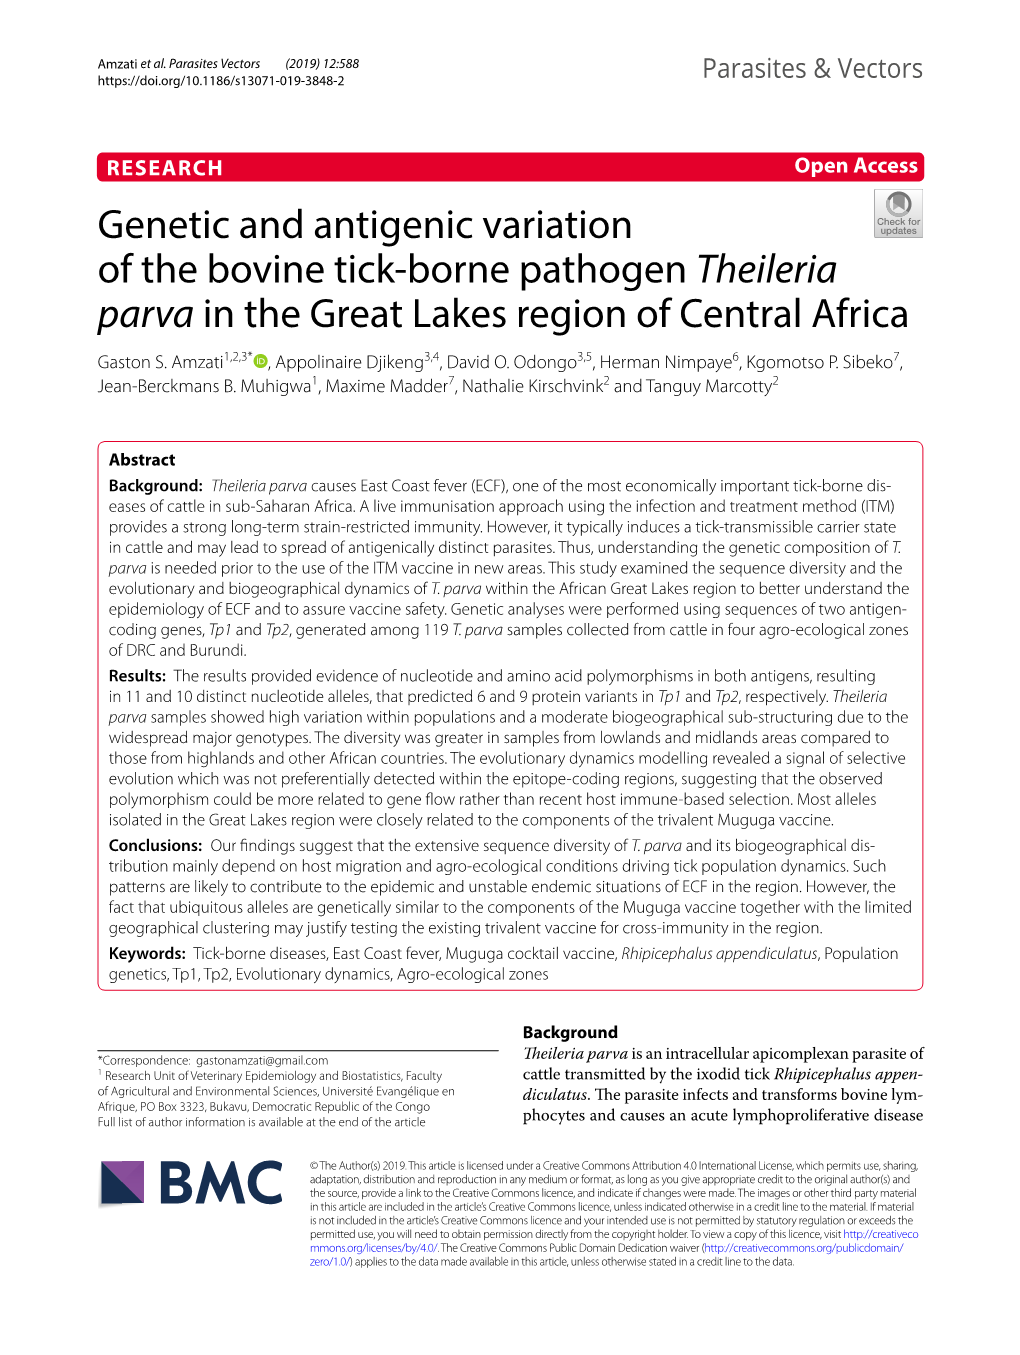 Genetic and Antigenic Variation of the Bovine Tick-Borne Pathogen